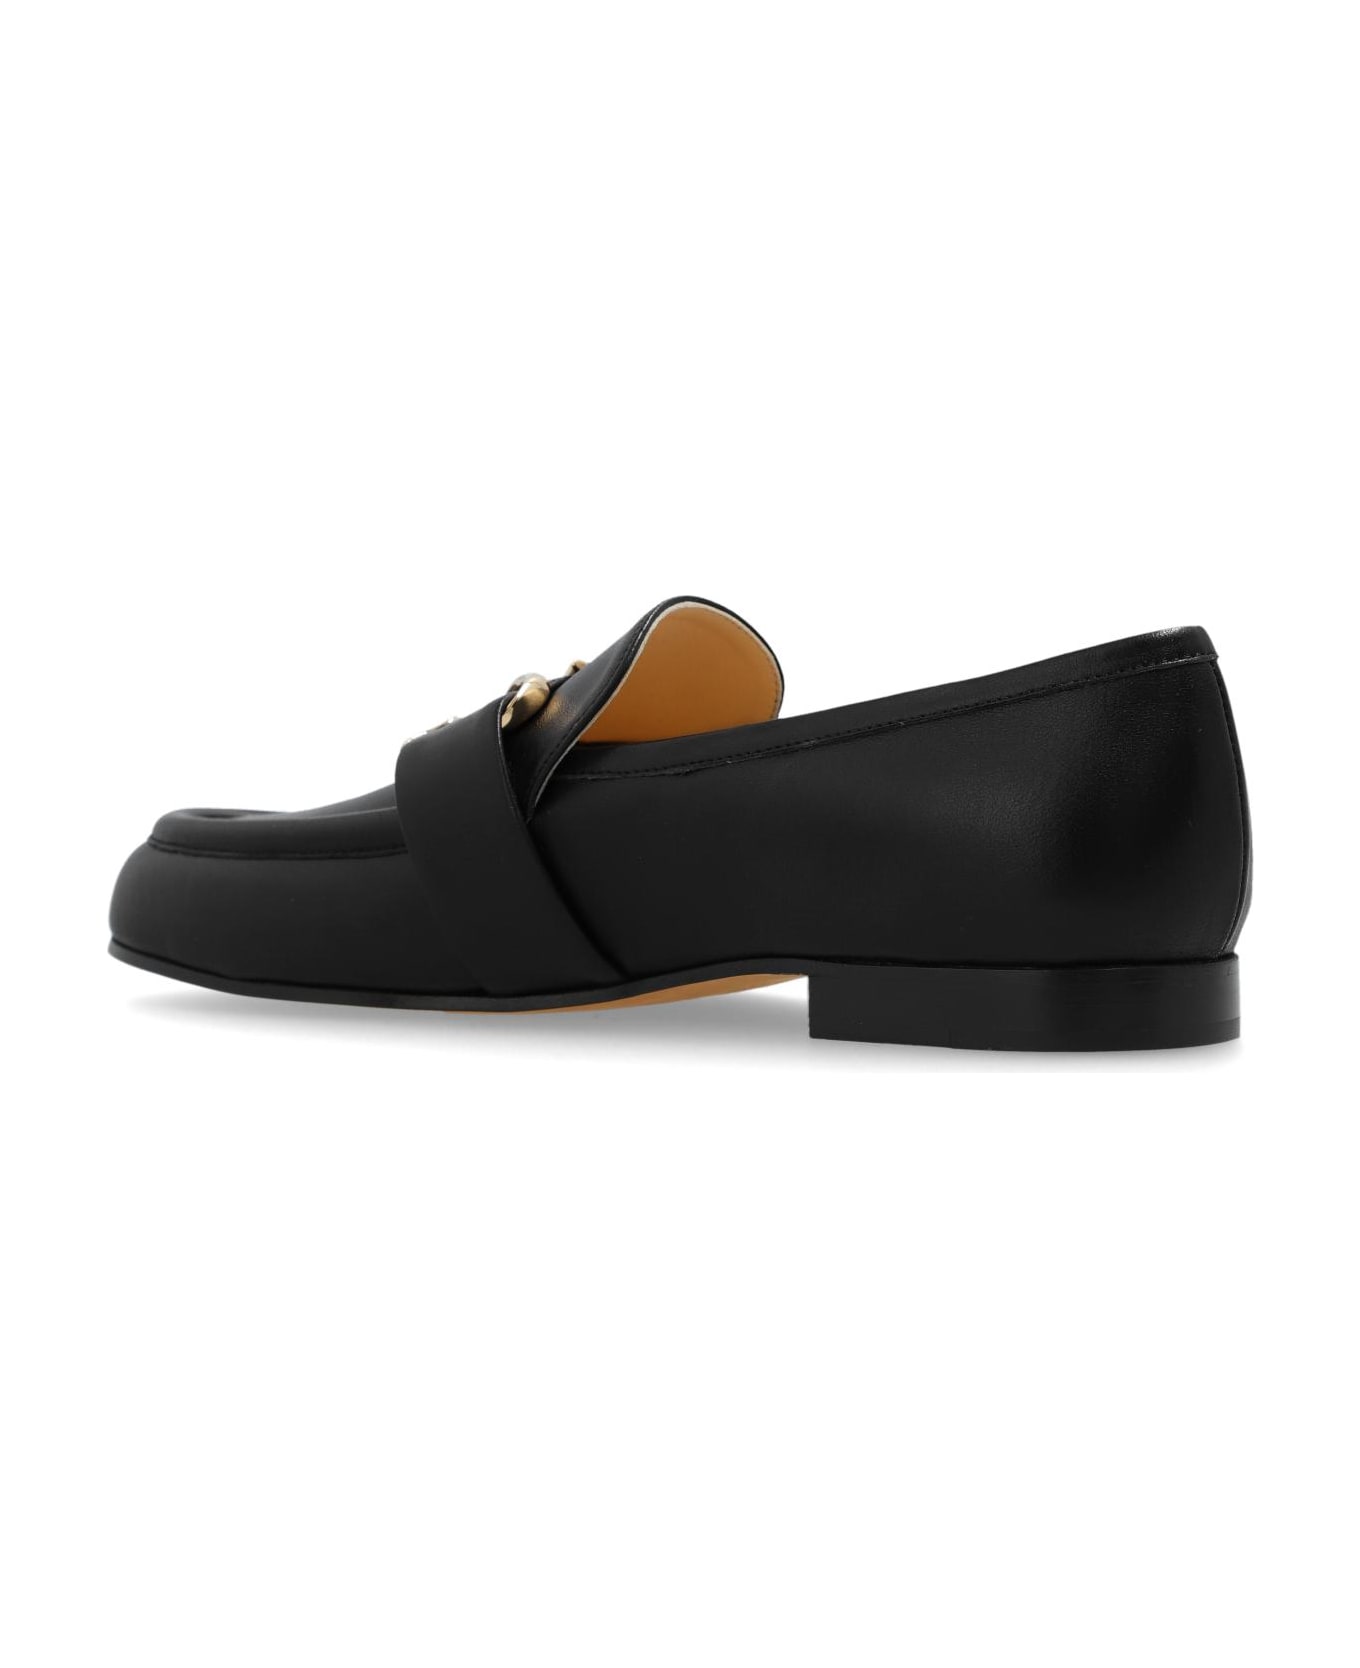 Proenza Schouler Leather Shoes - Black